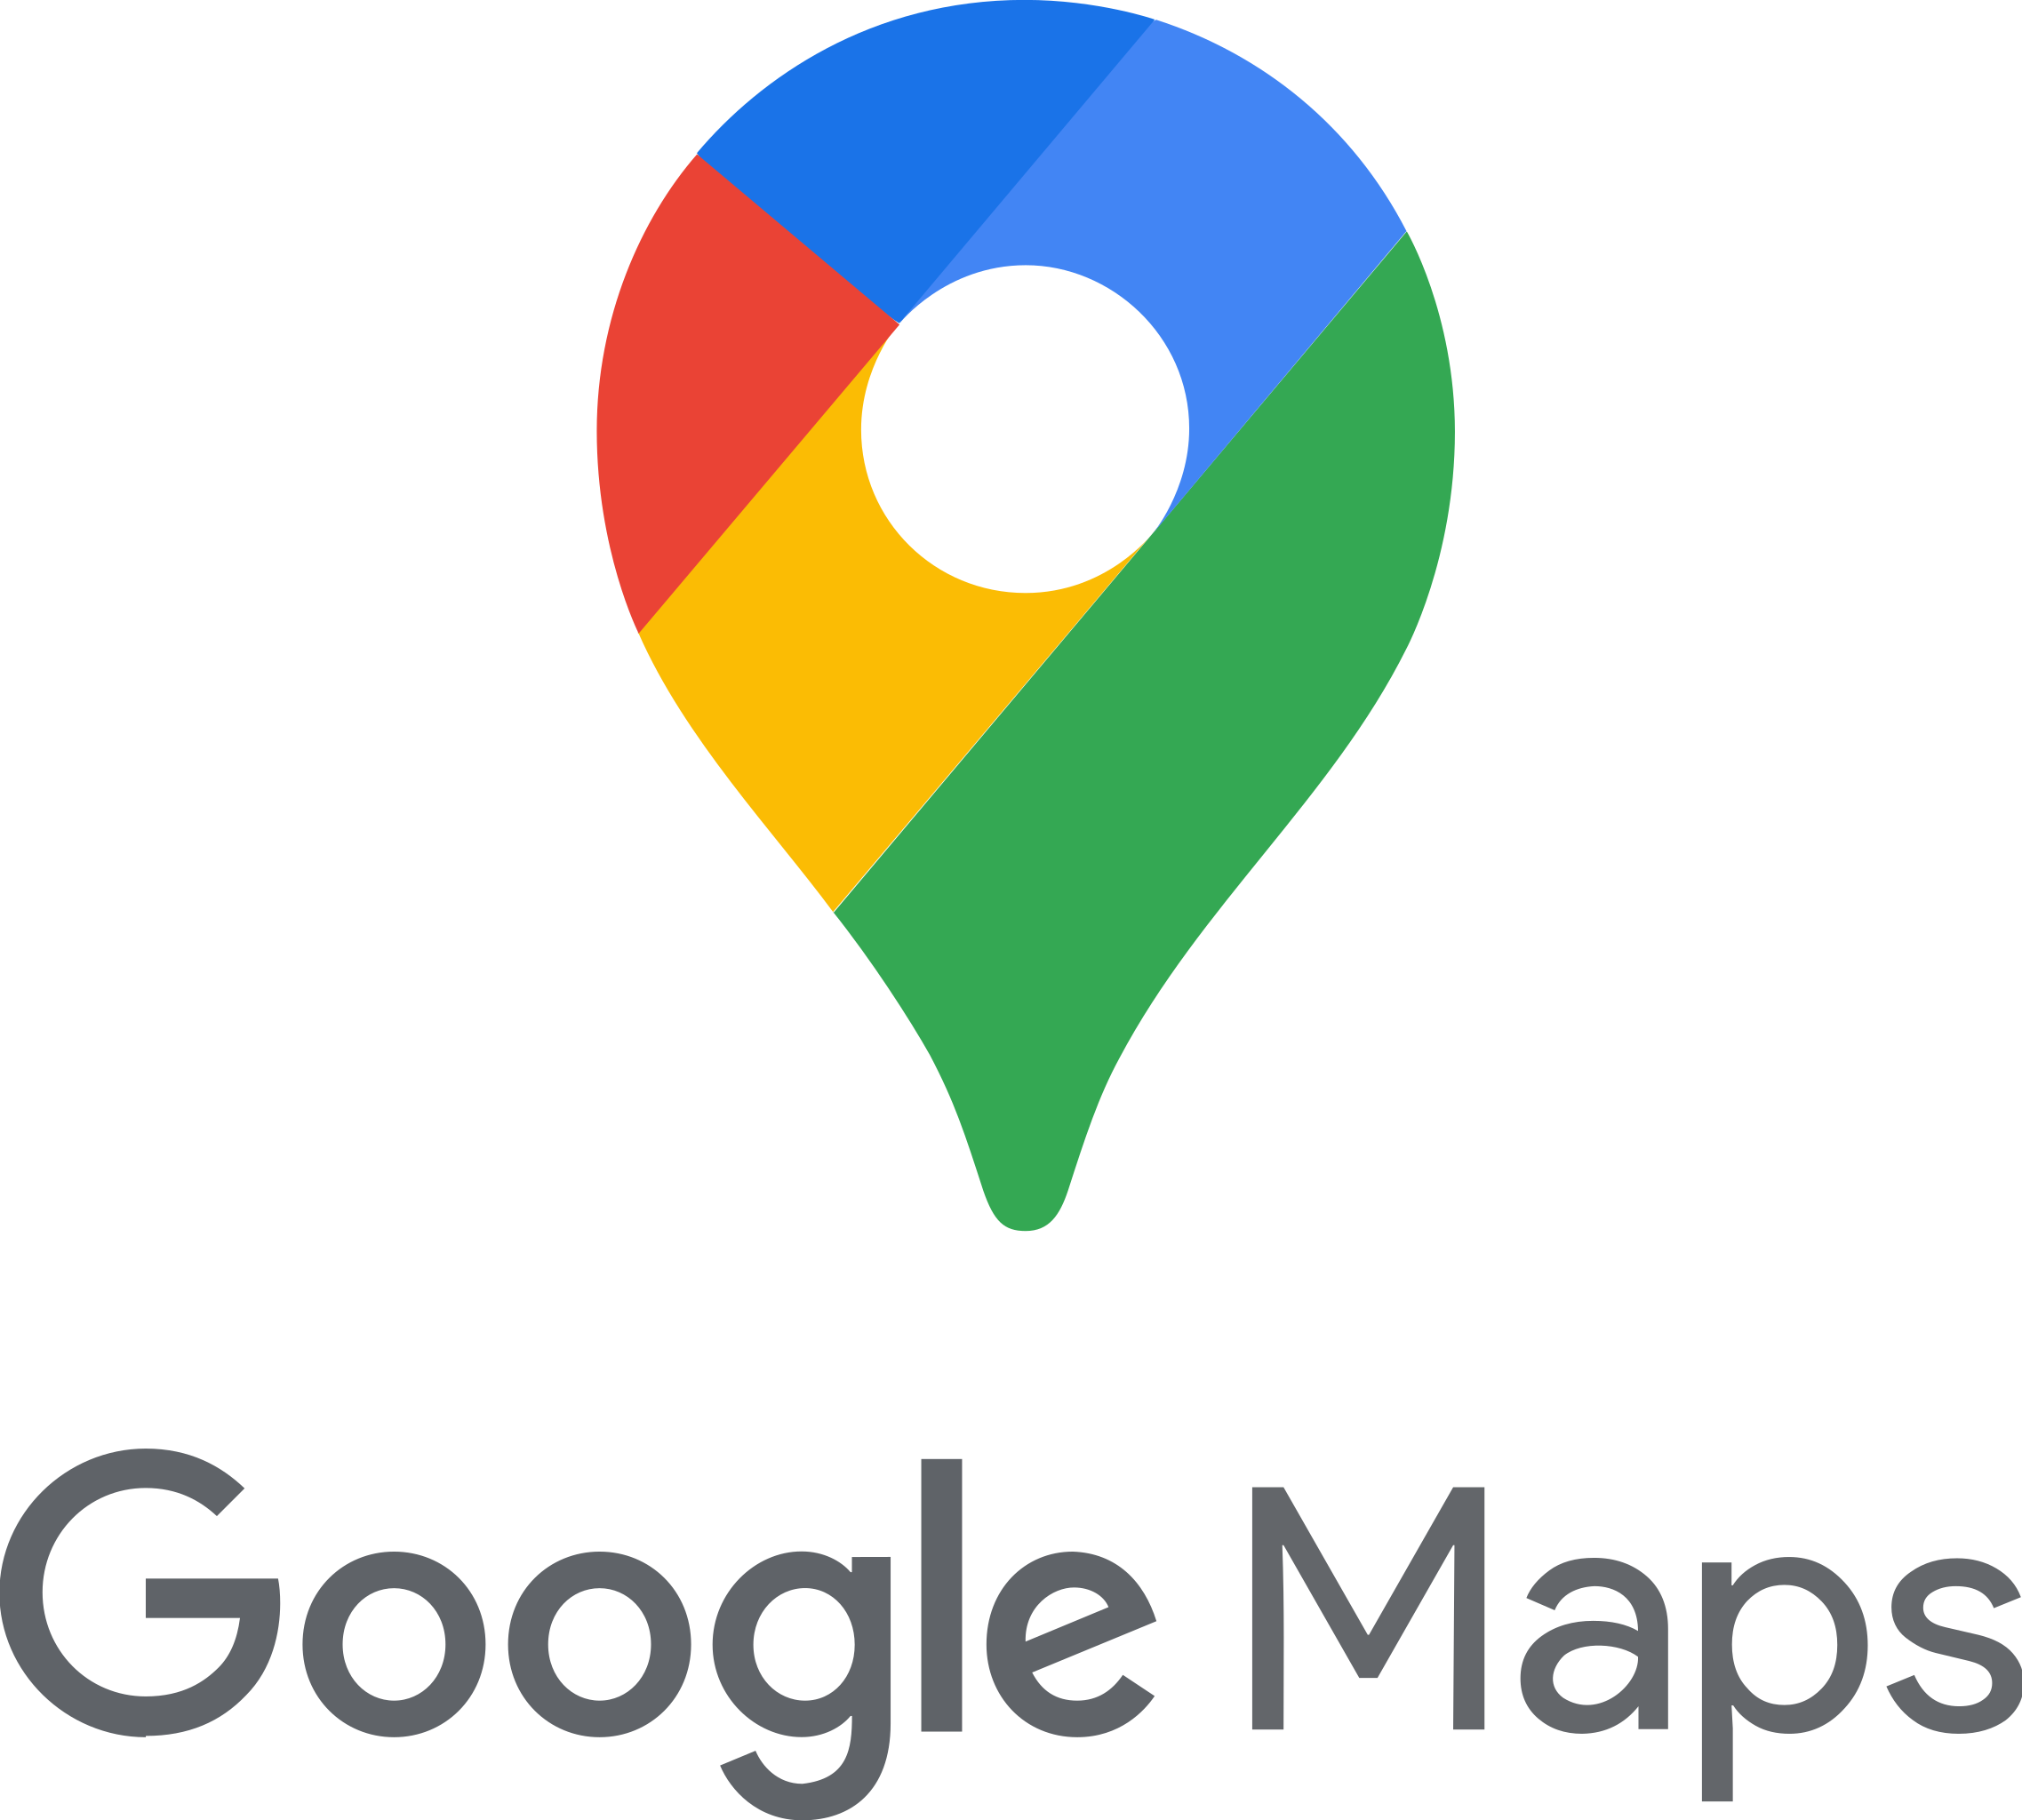 (Google Maps